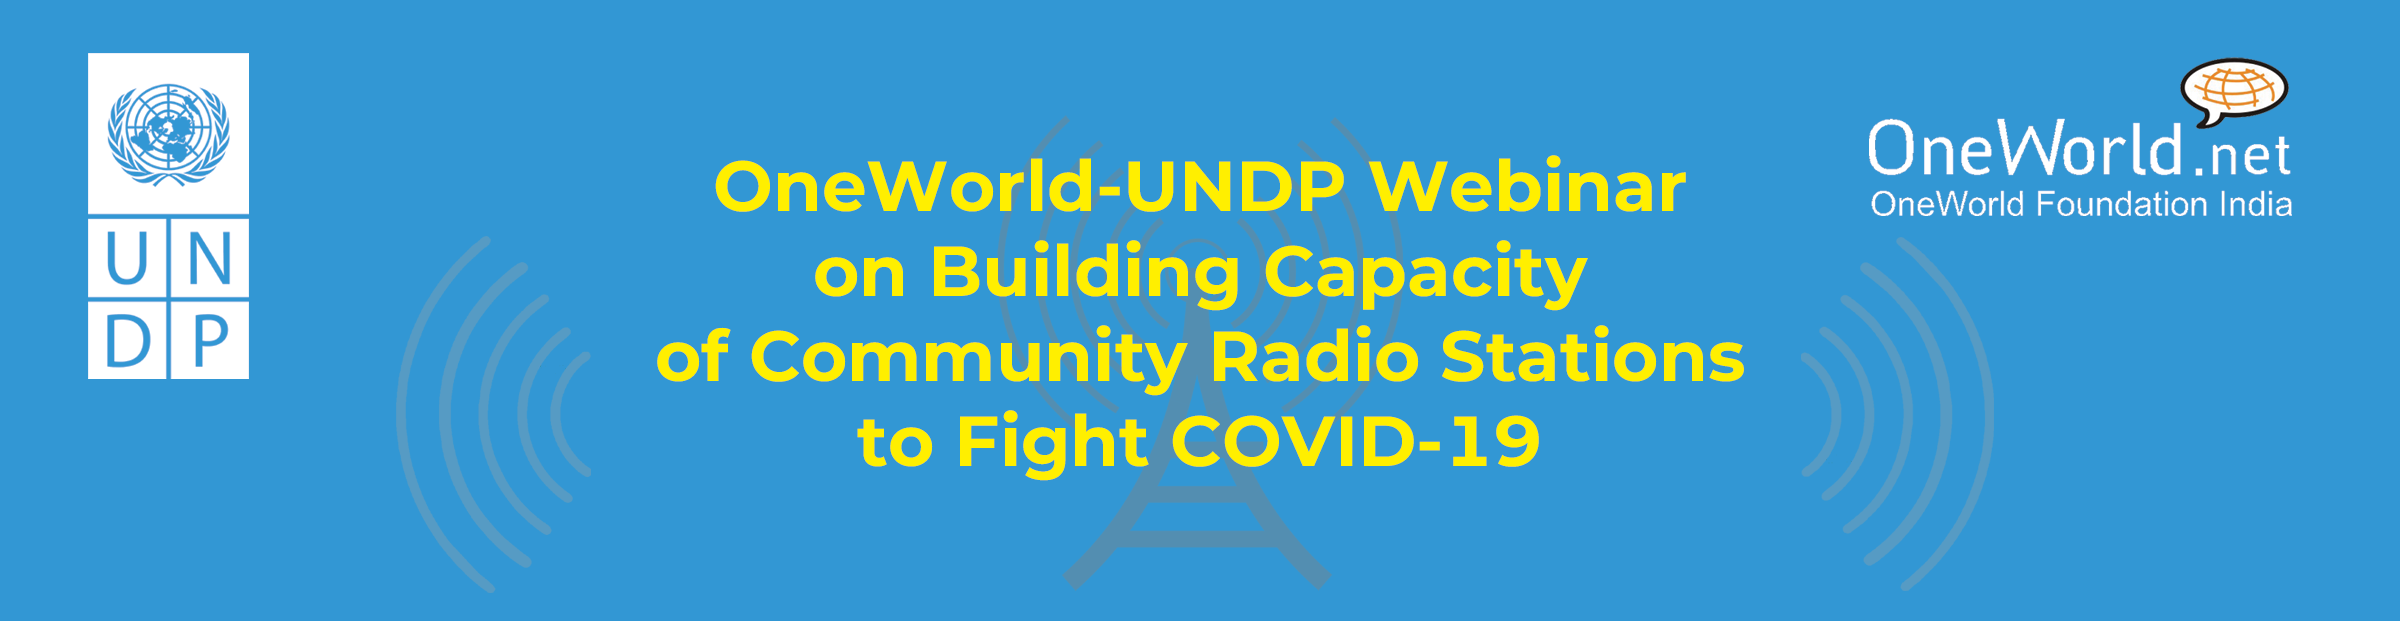 UNDP OneWorld Webinar